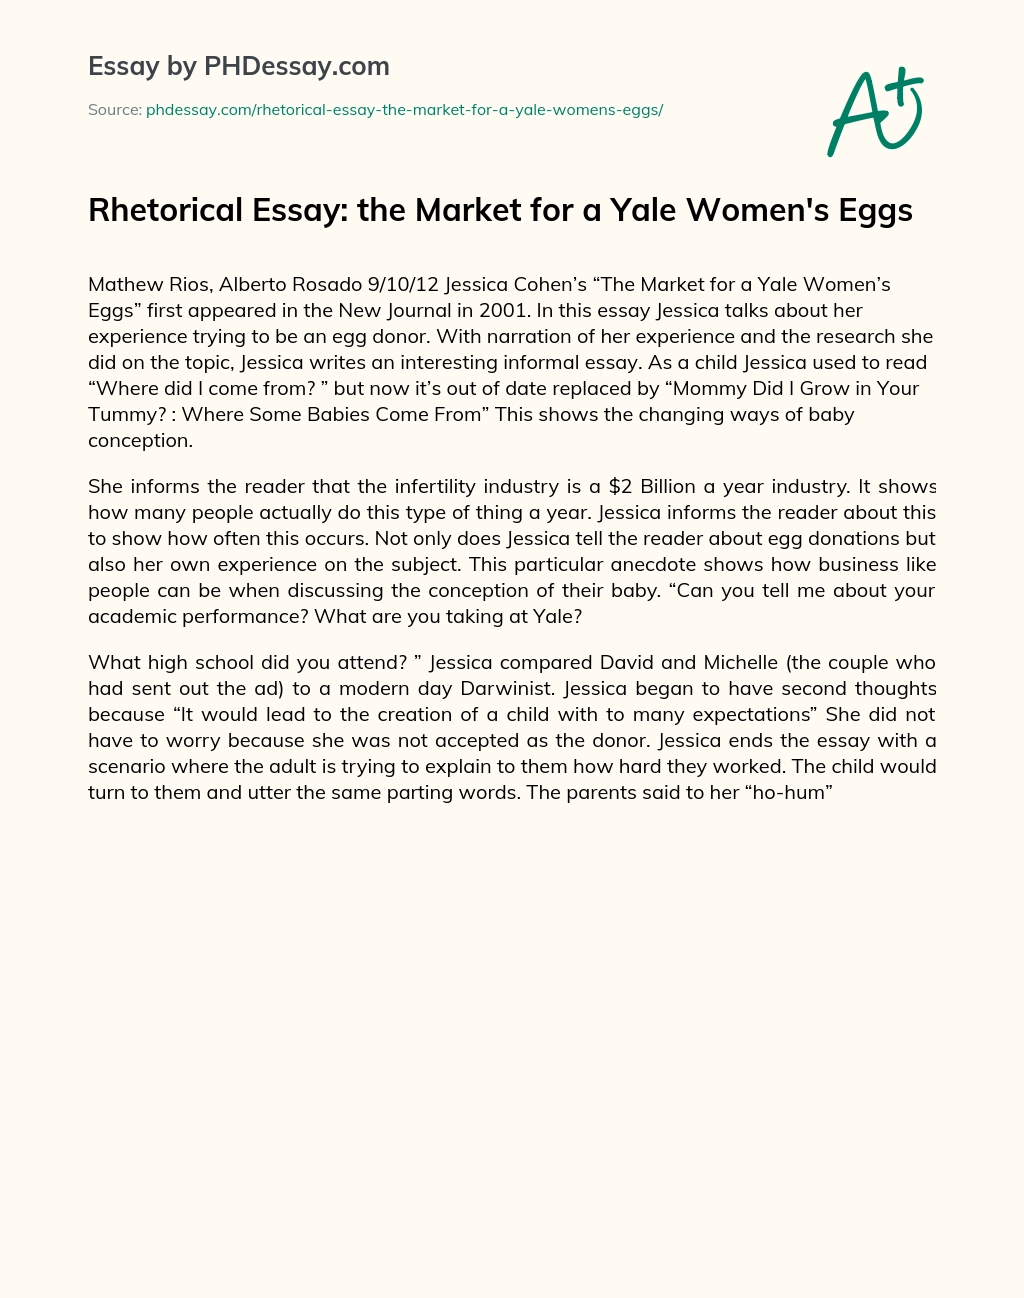 Rhetorical Essay: the Market for a Yale Women’s Eggs essay